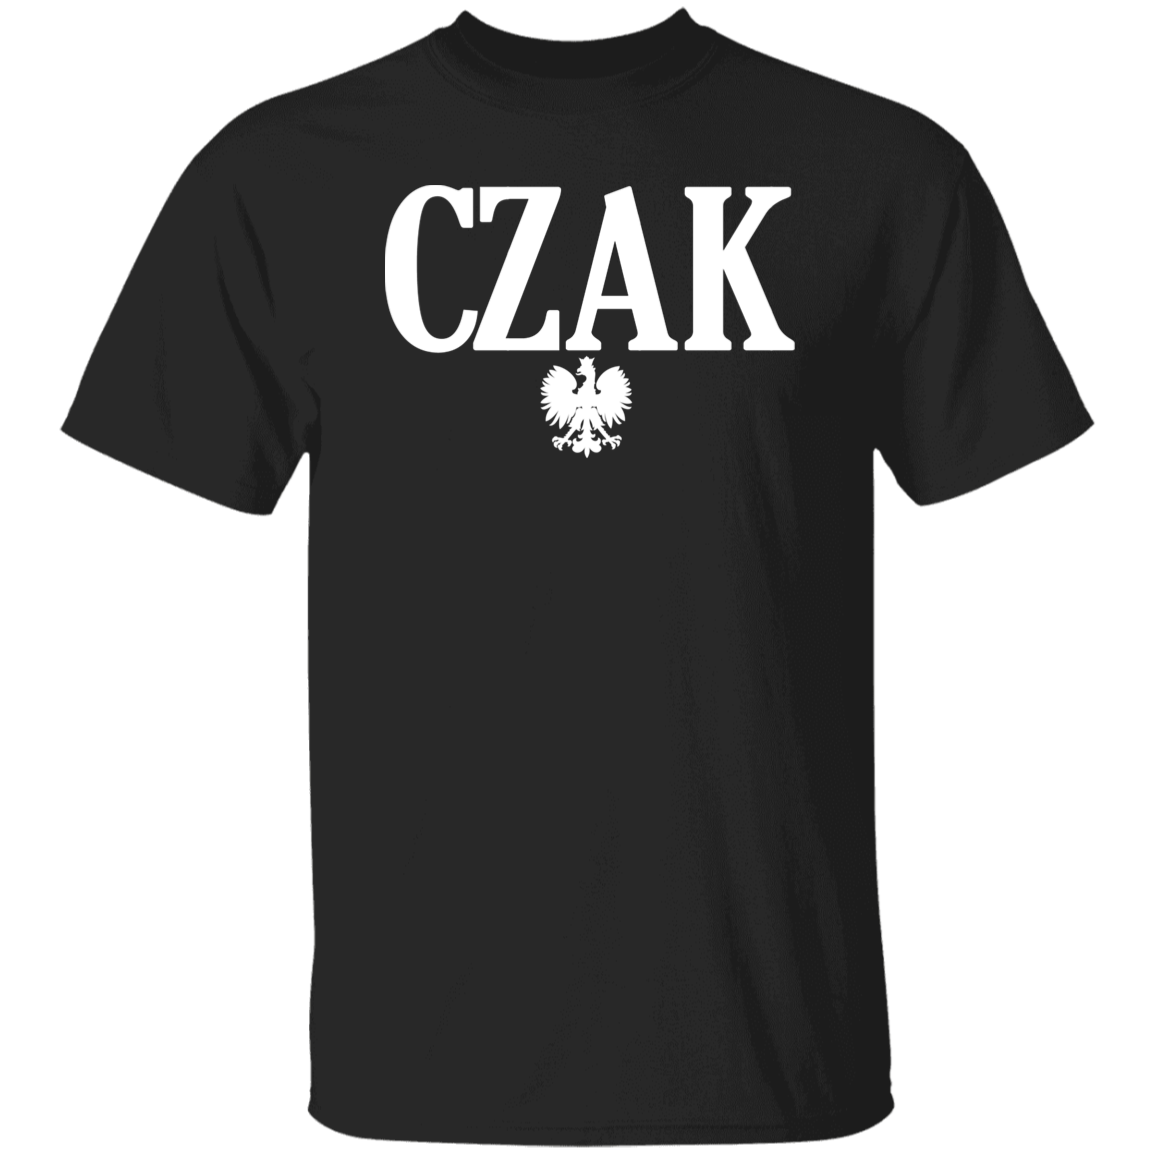 CZAK Polish Surname Ending Apparel CustomCat G500 5.3 oz. T-Shirt Black S